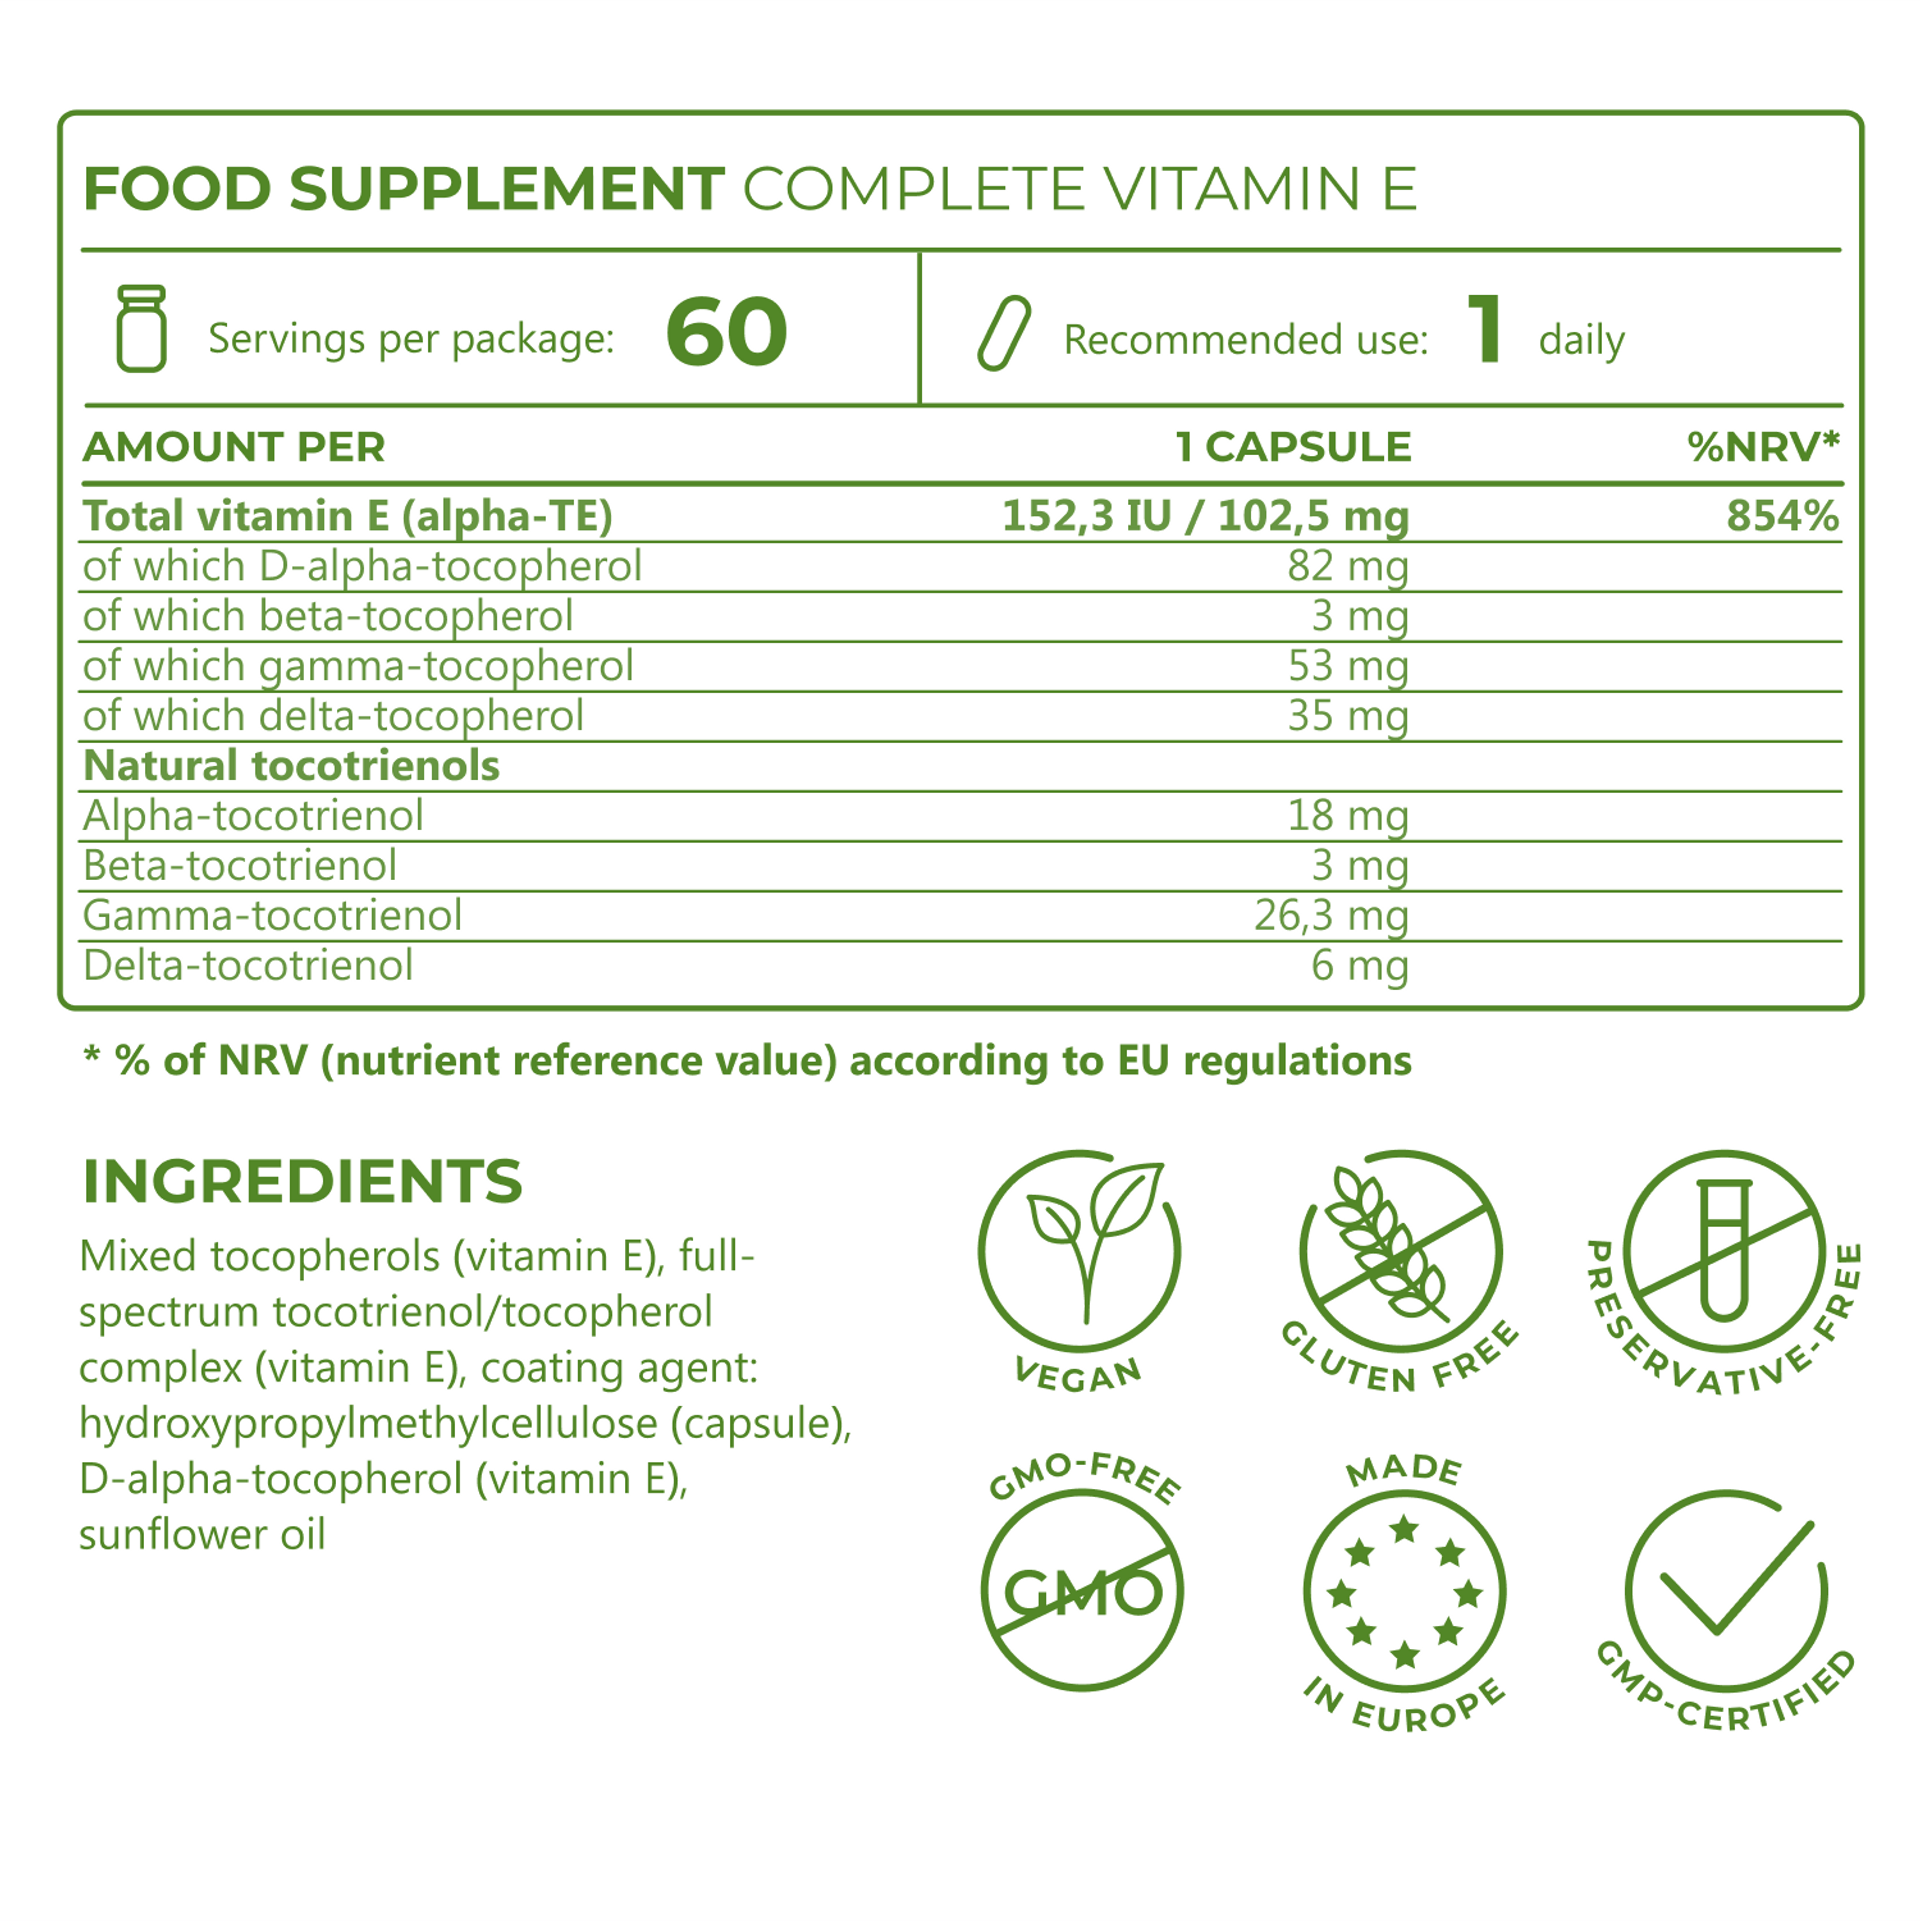 5_EN_Ingredients_Complete Vitamin E_6891-11.png